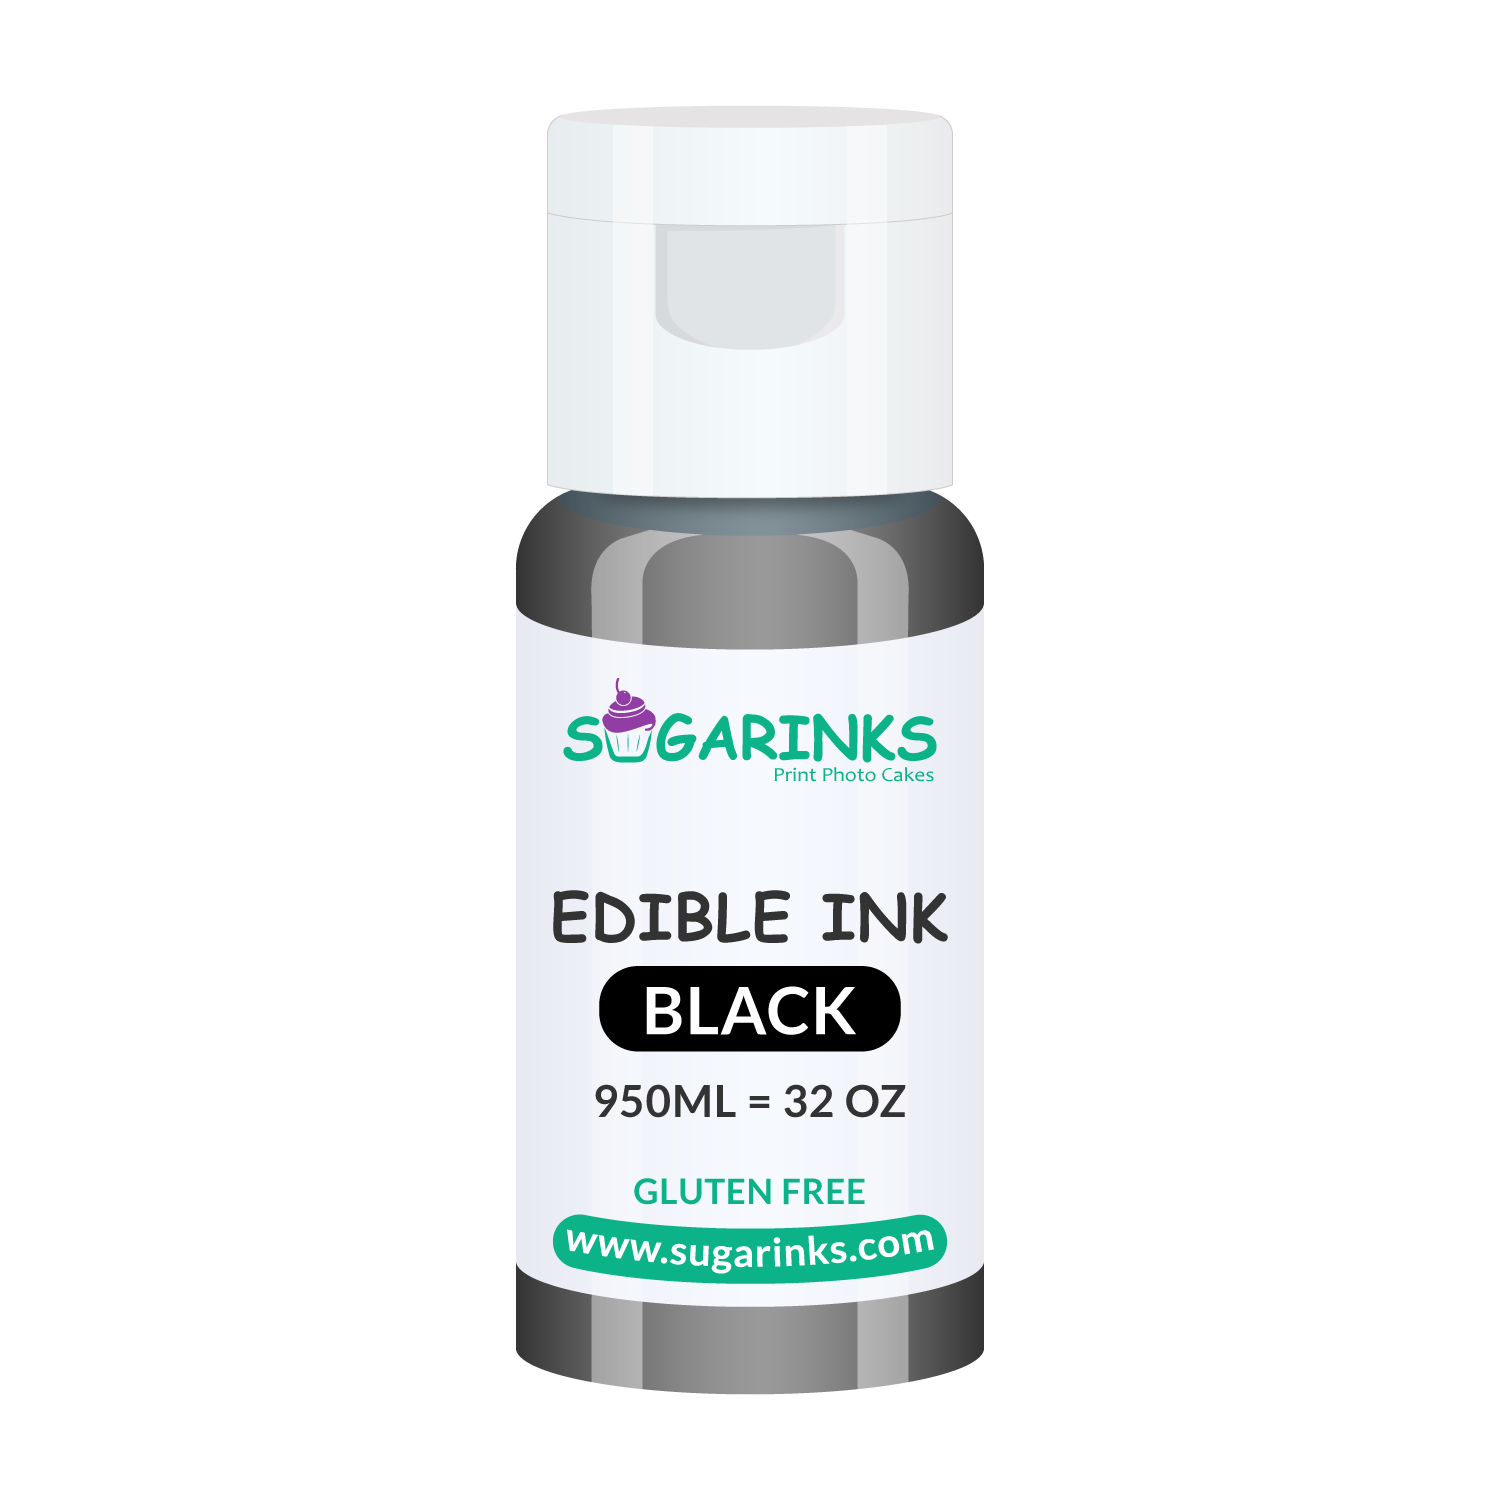 Sugarinks Edible Ink Refill for Epson Edible Printers (950ml/32Oz) – Black